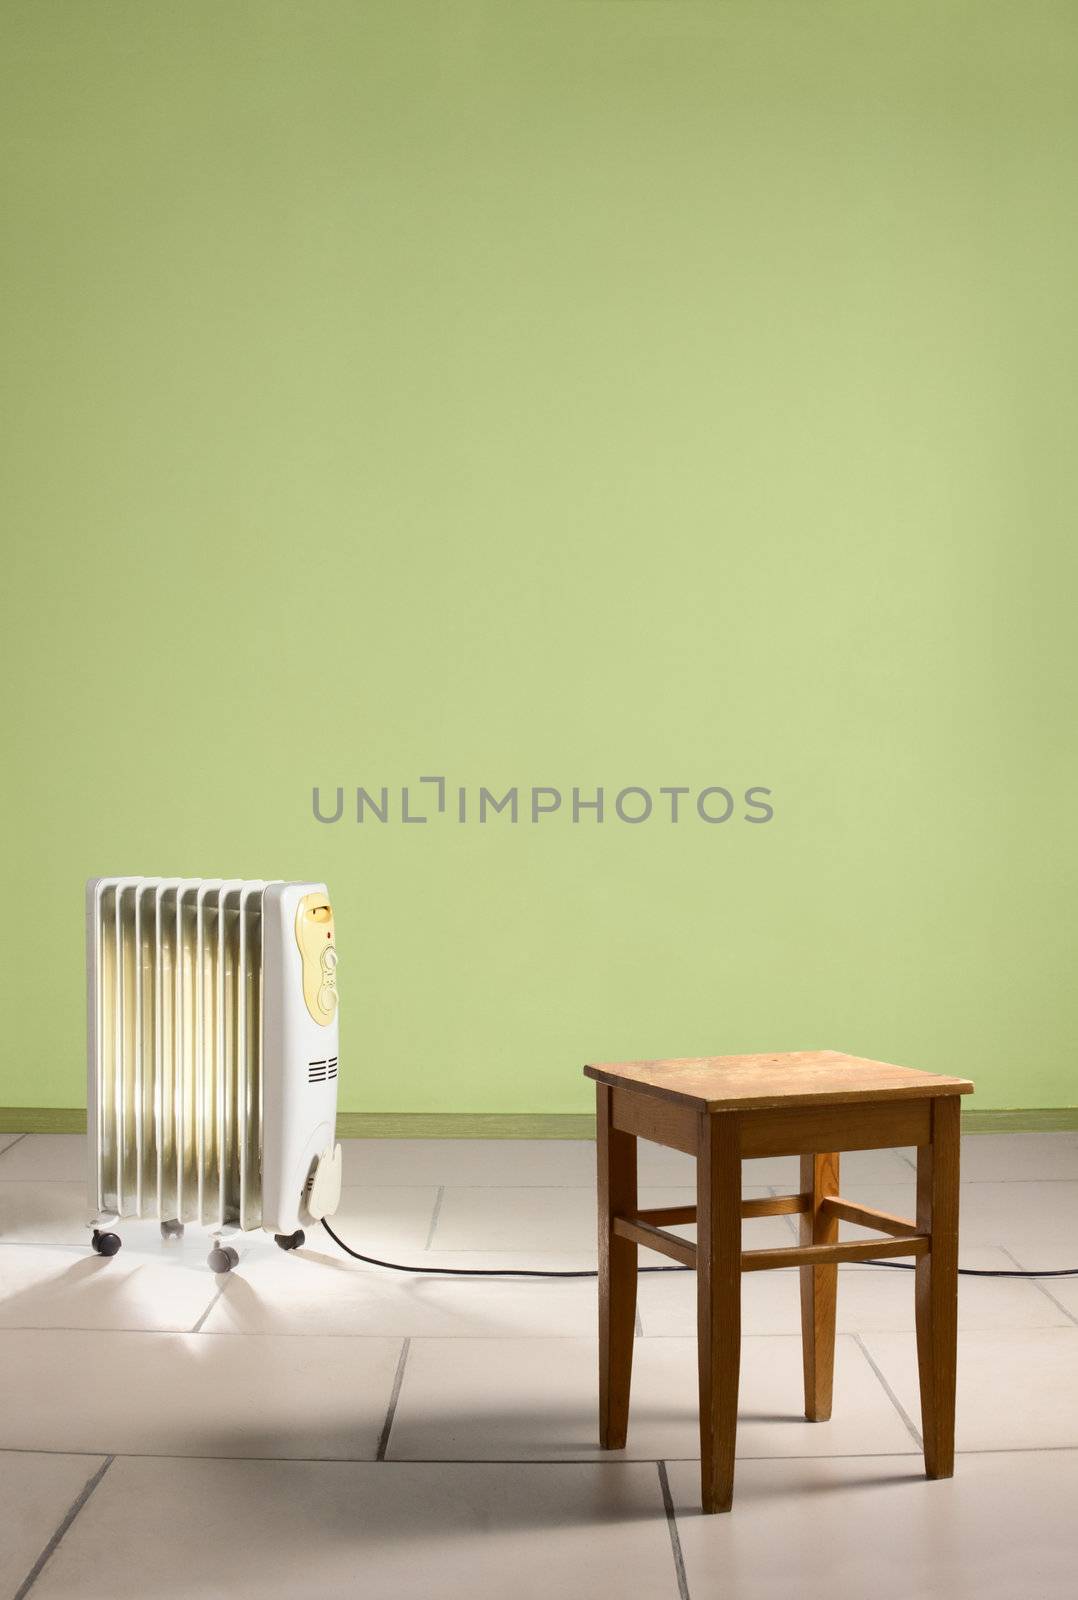 Heating radiator in empty room by zakaz